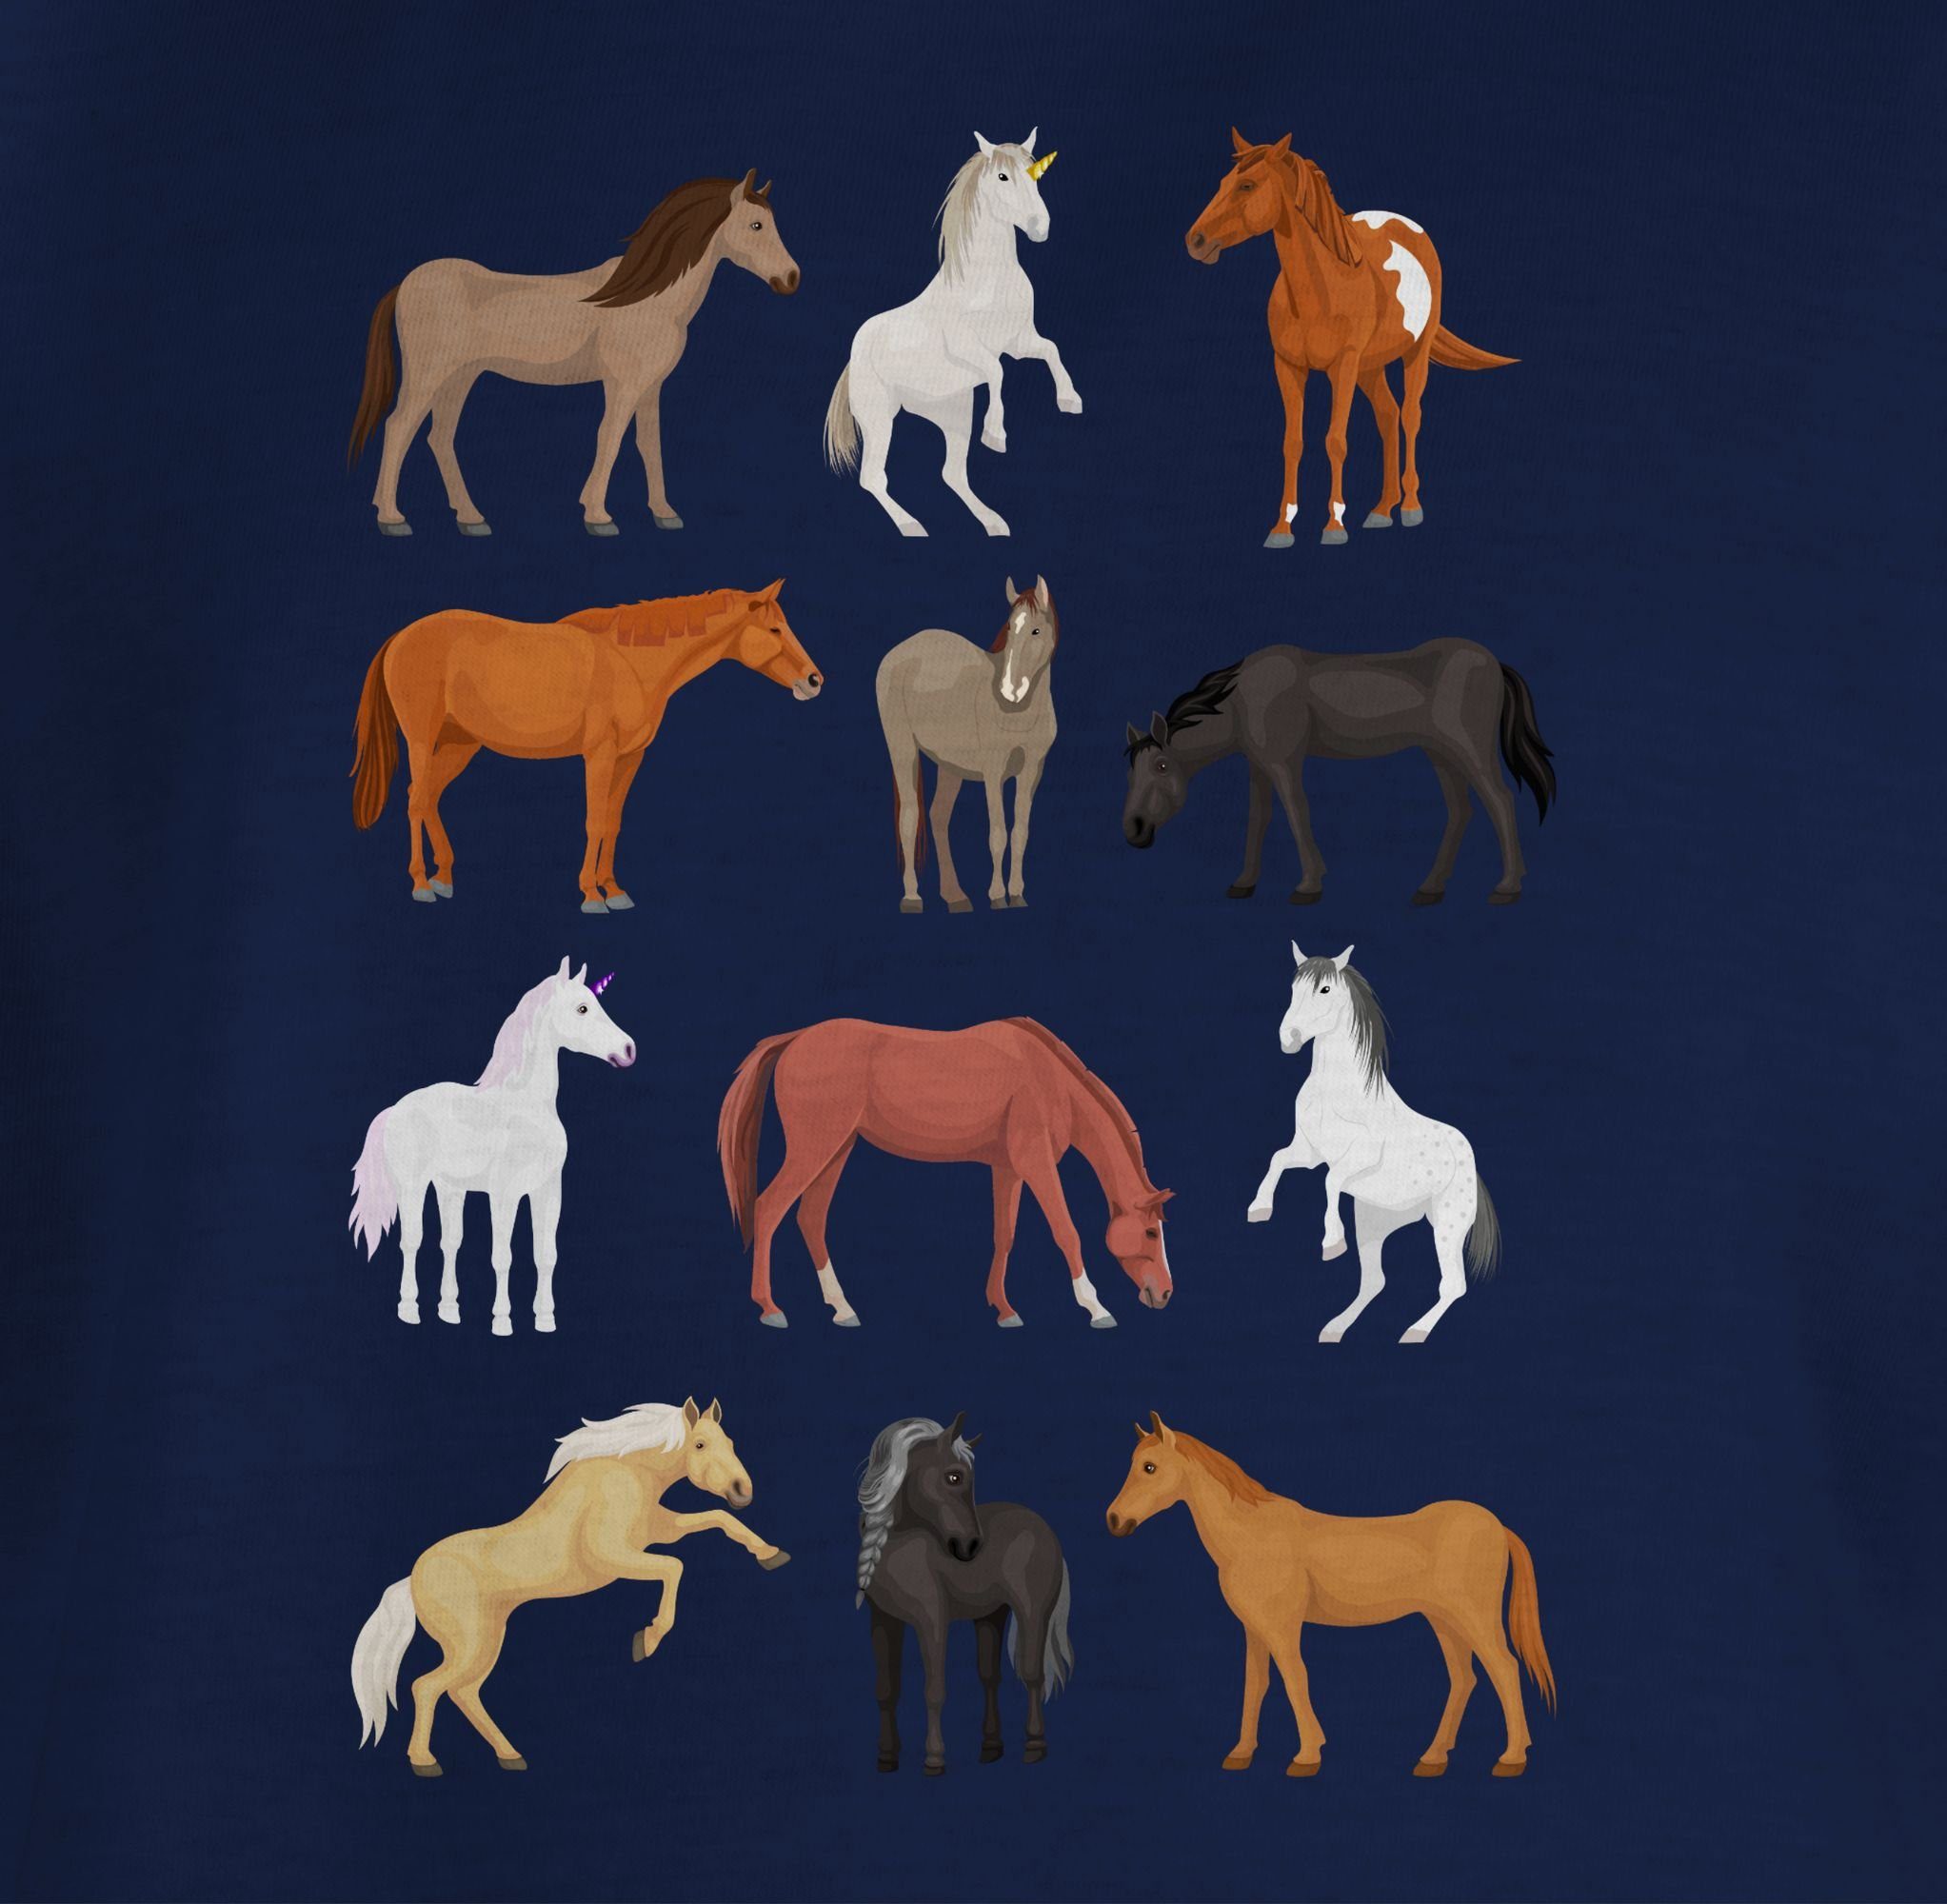 Dunkelblau Animal Reihe T-Shirt 3 Print Tiermotiv Shirtracer Pferde